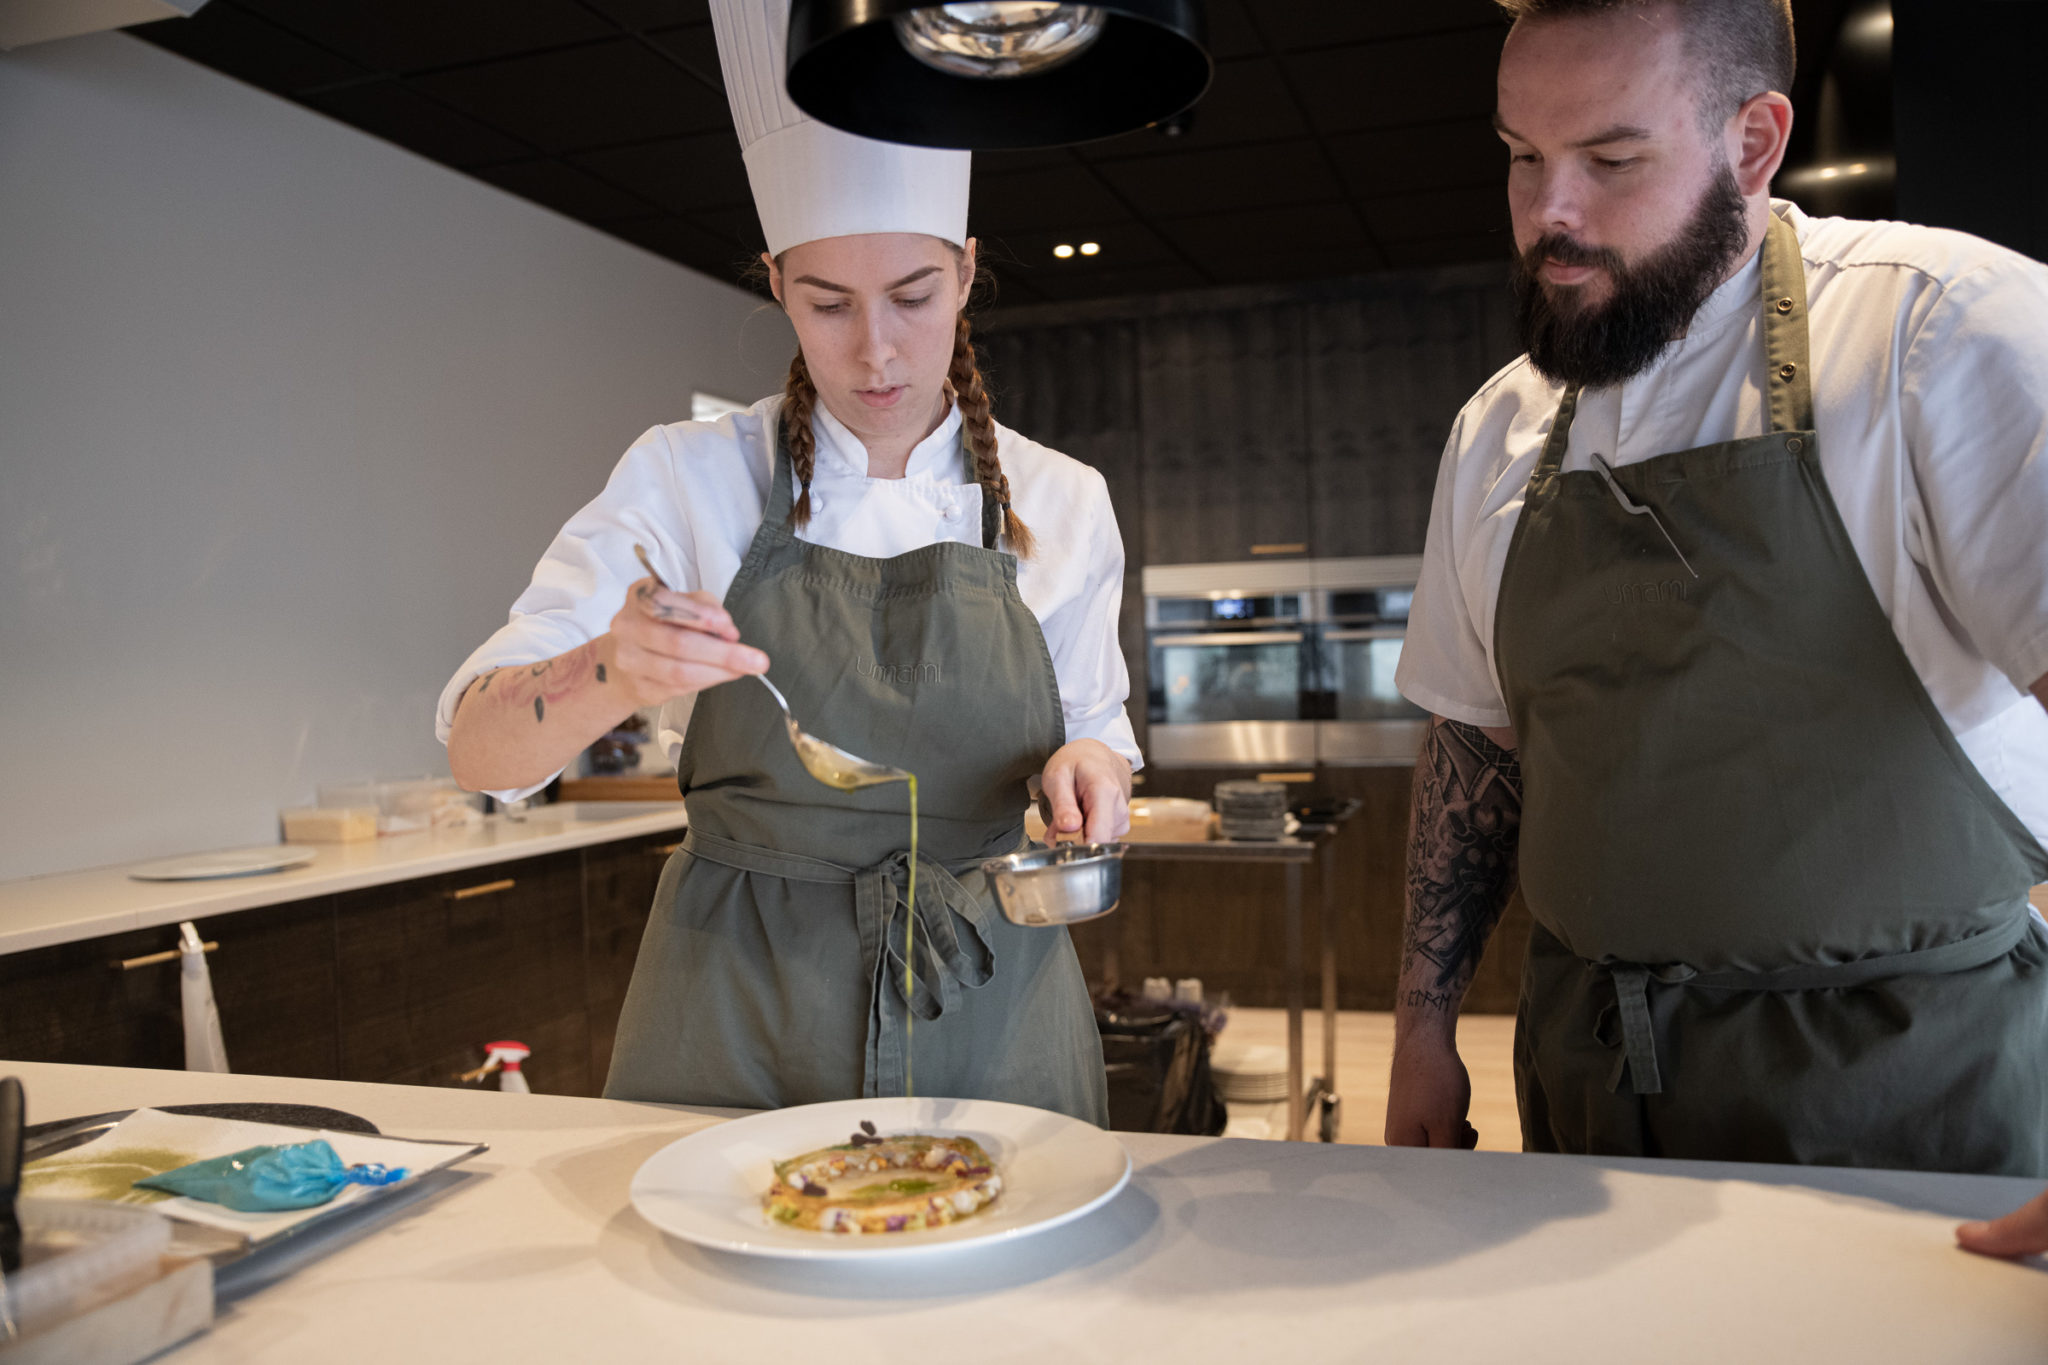 The Umami chefs at work © Lars Åke Andersen